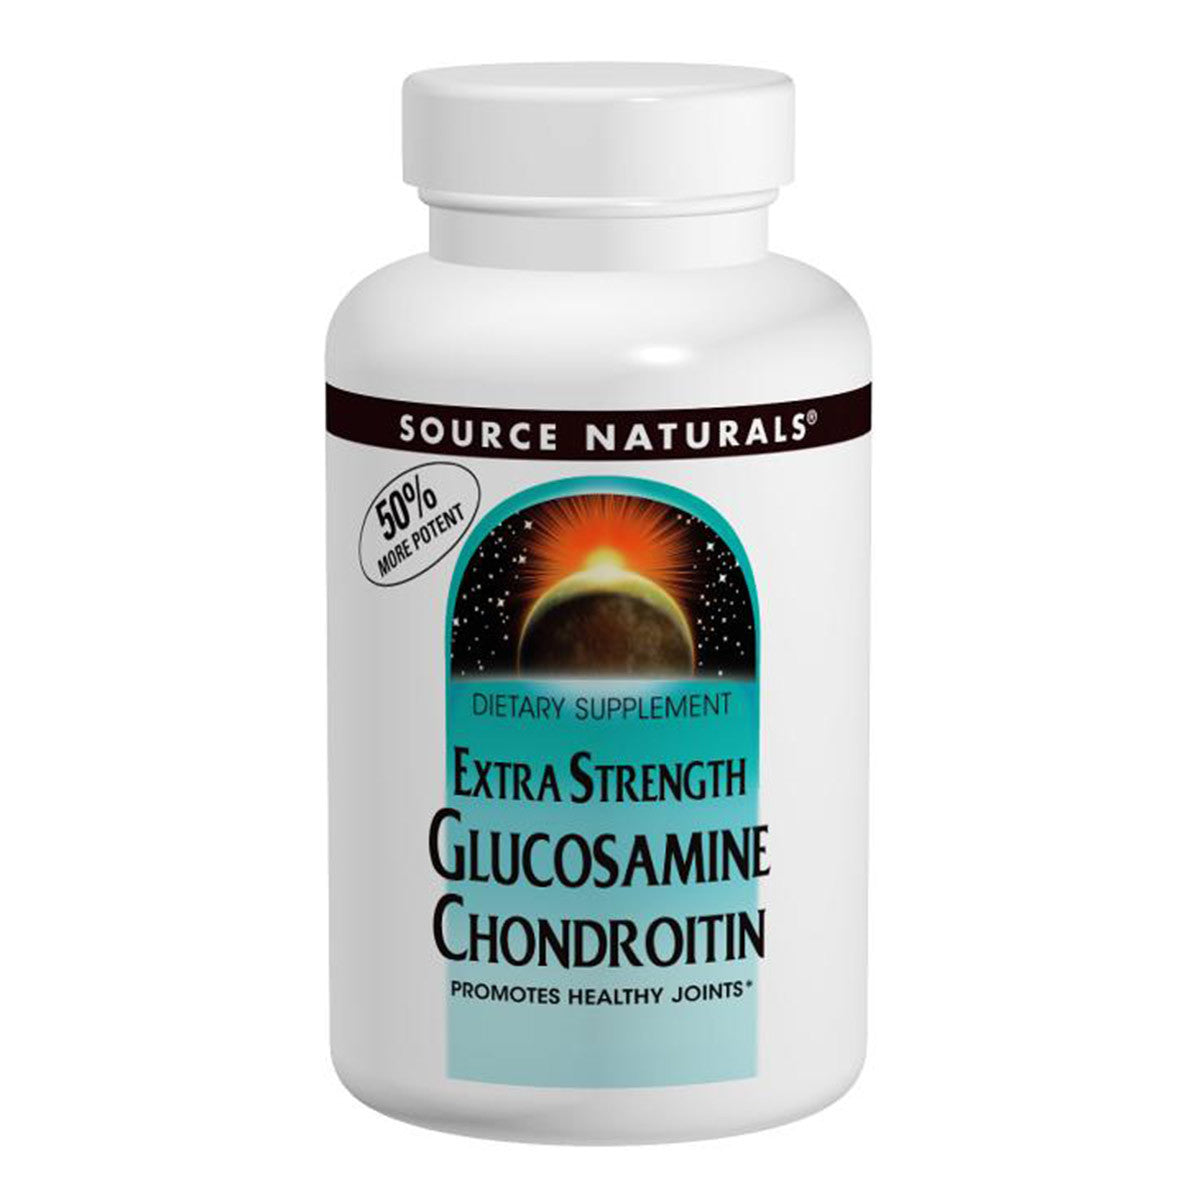 Primary image of Glucosamine/Chondroitin Extra